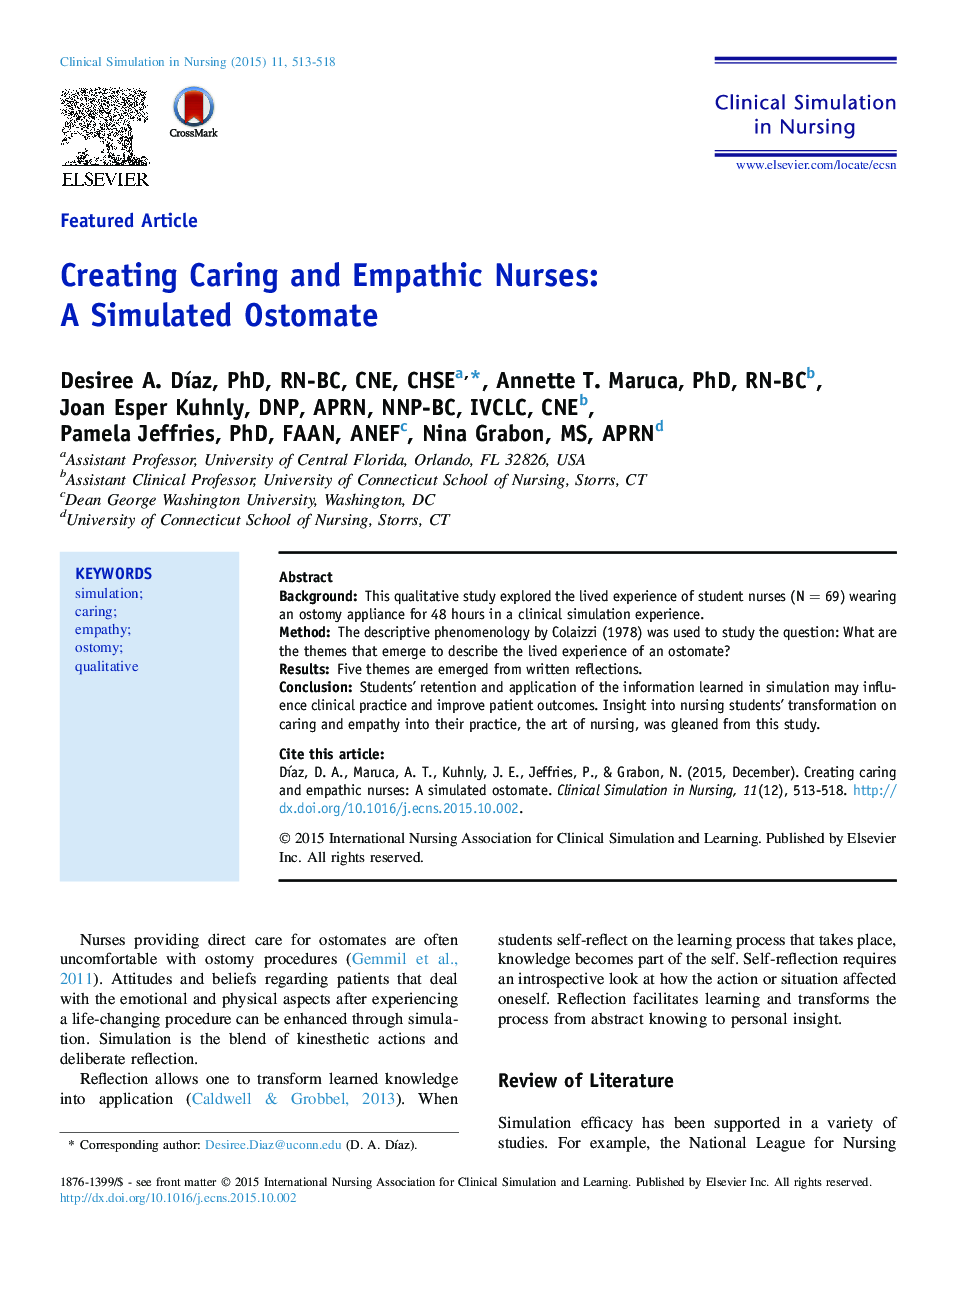 Creating Caring and Empathic Nurses: A Simulated Ostomate